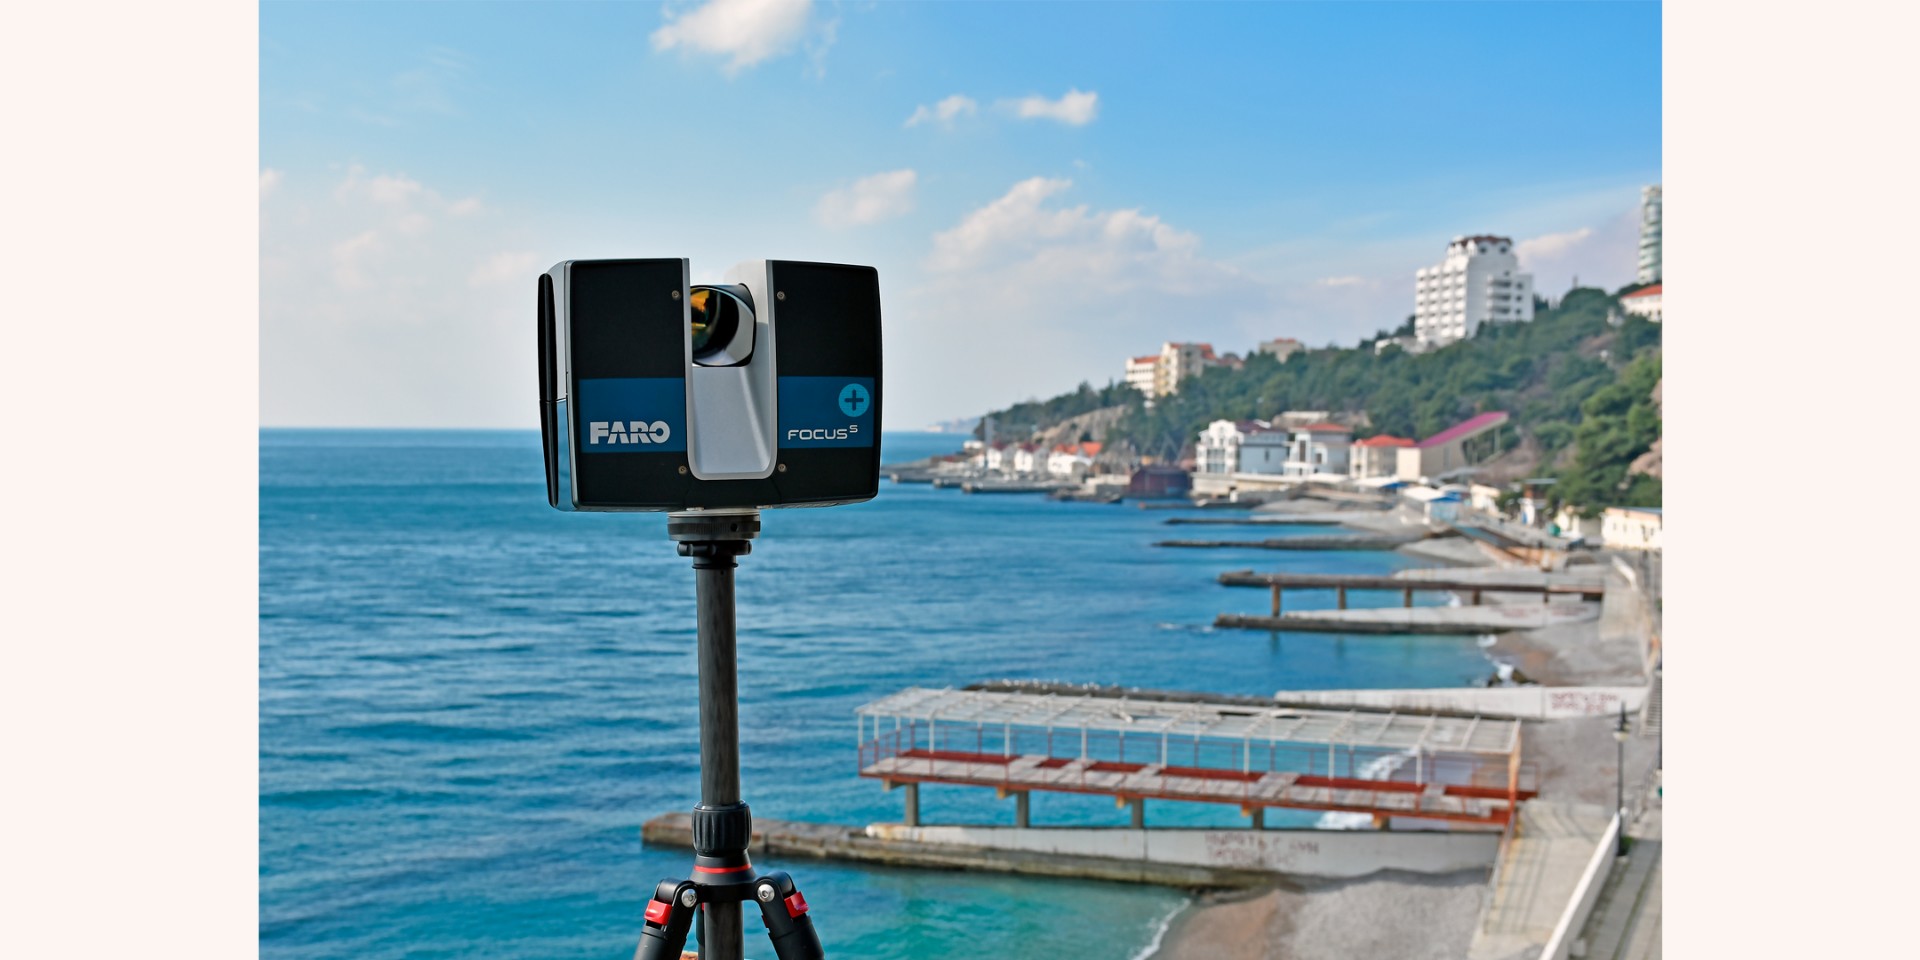 Фото 3D сканер FARO Laser Scanner Focus S350 Plus